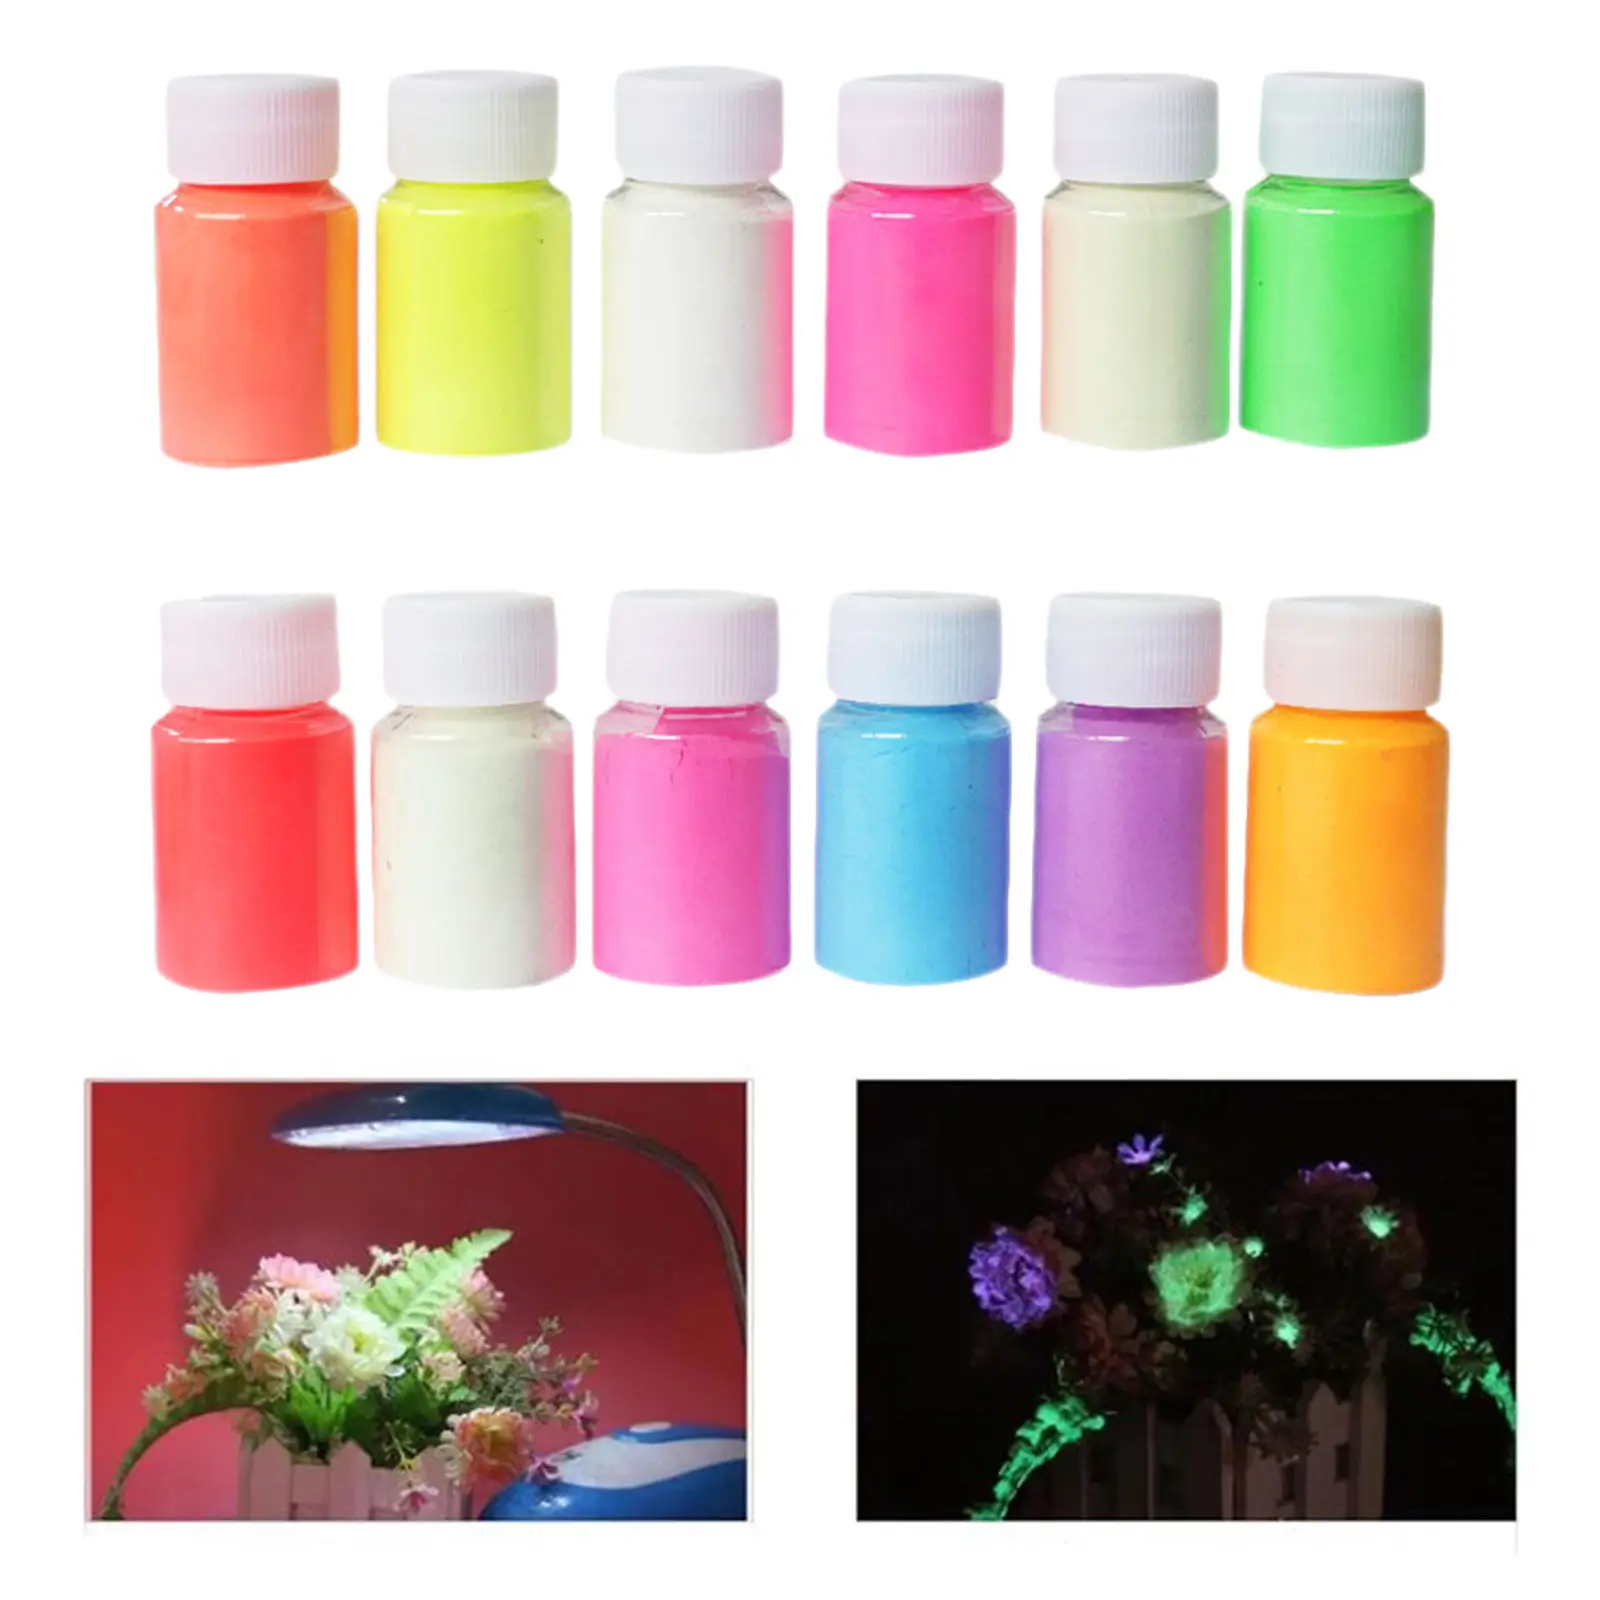 12 Colors Super Bright Luminous Epoxy Resin Pigment Glow in The Dark Liquid Colorant Body Art UV Body Paint Set Each 20g